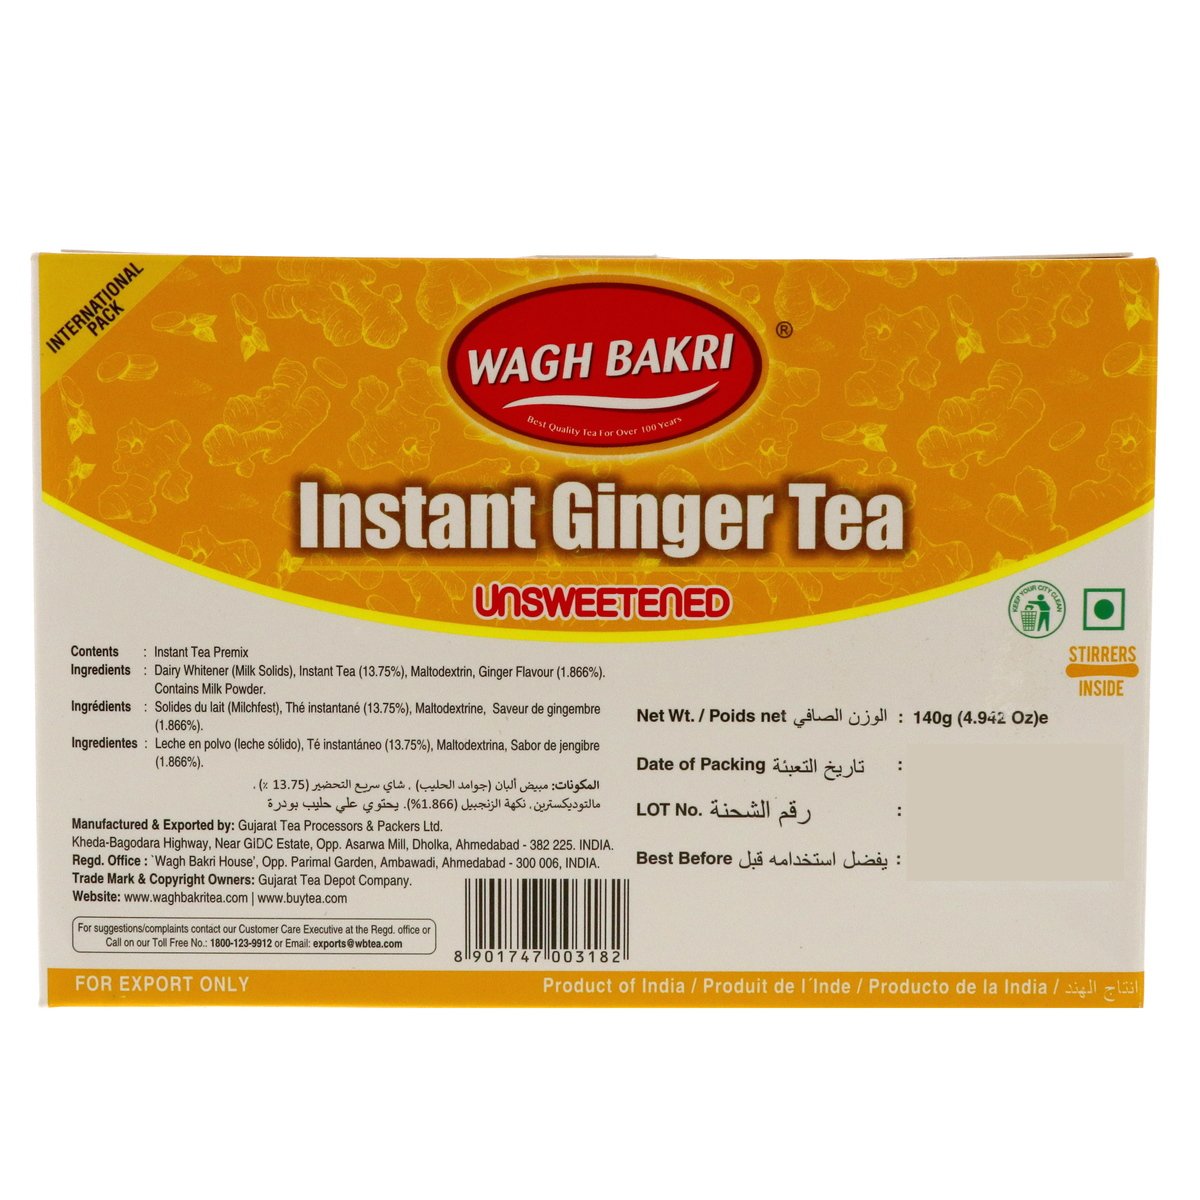 Wagh Bakri Instant Ginger Tea Karak Chai 140g